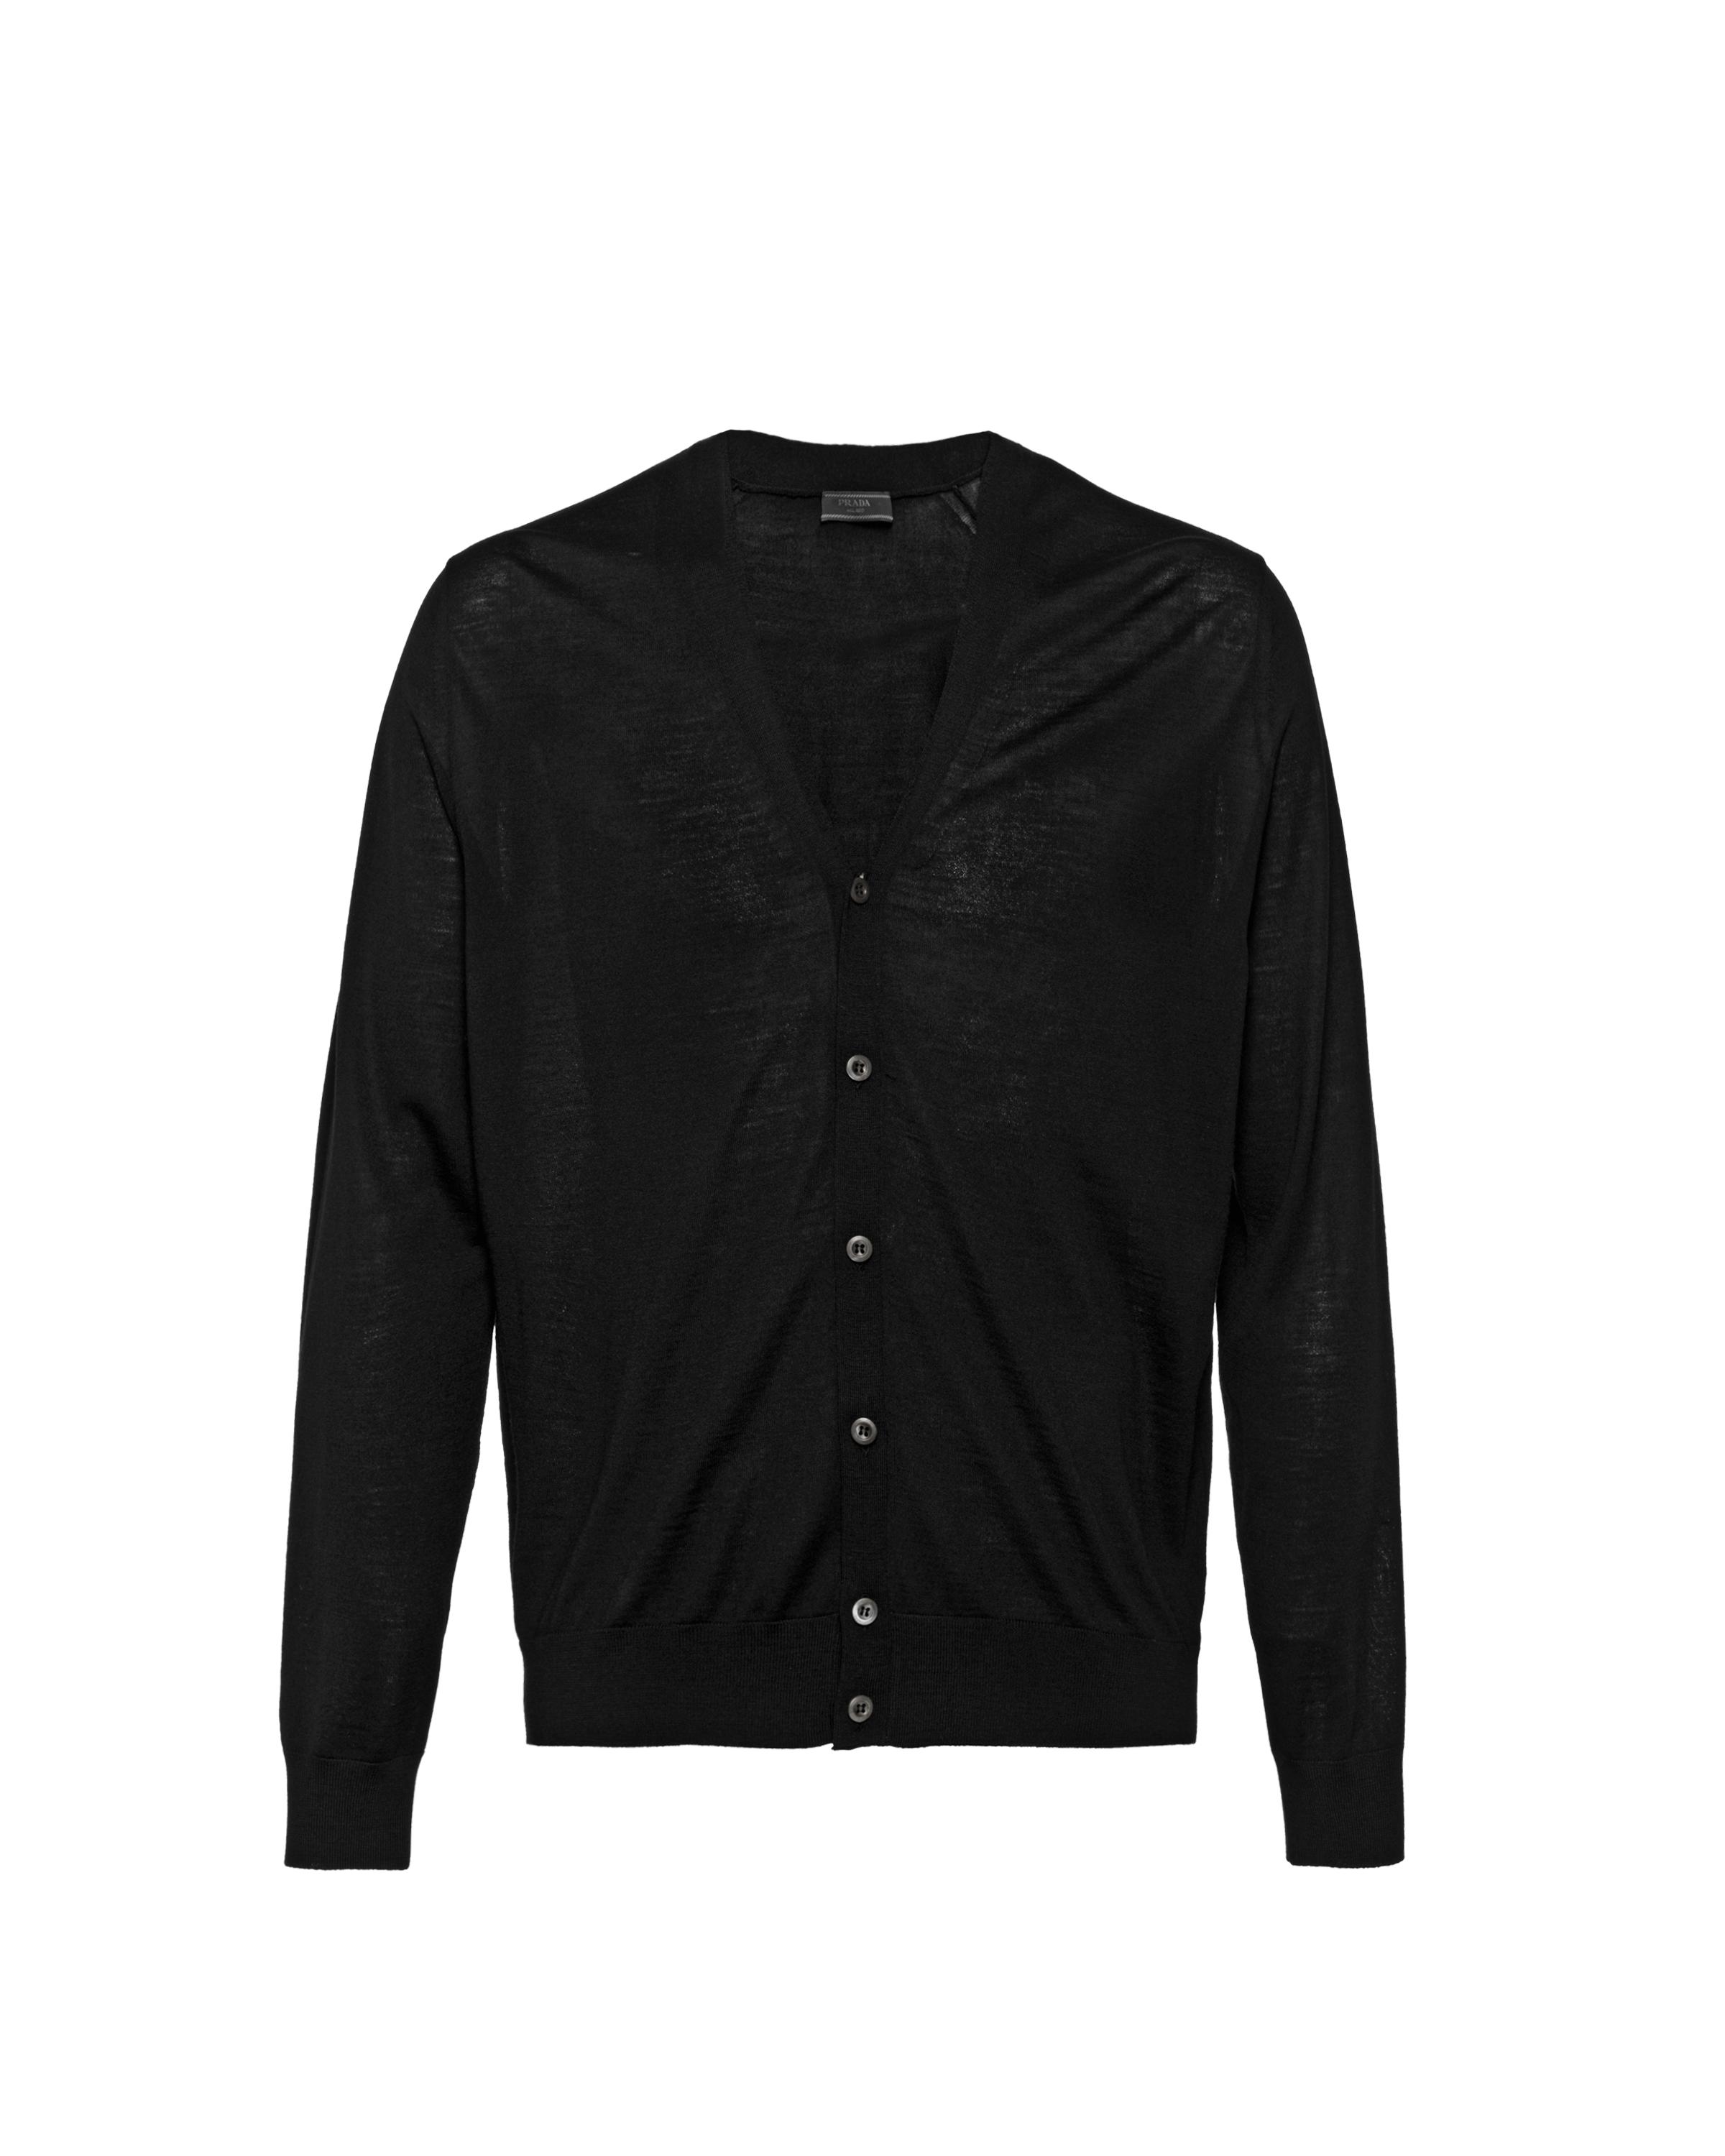 Prada Wool Cardigan in Black for Men - Lyst